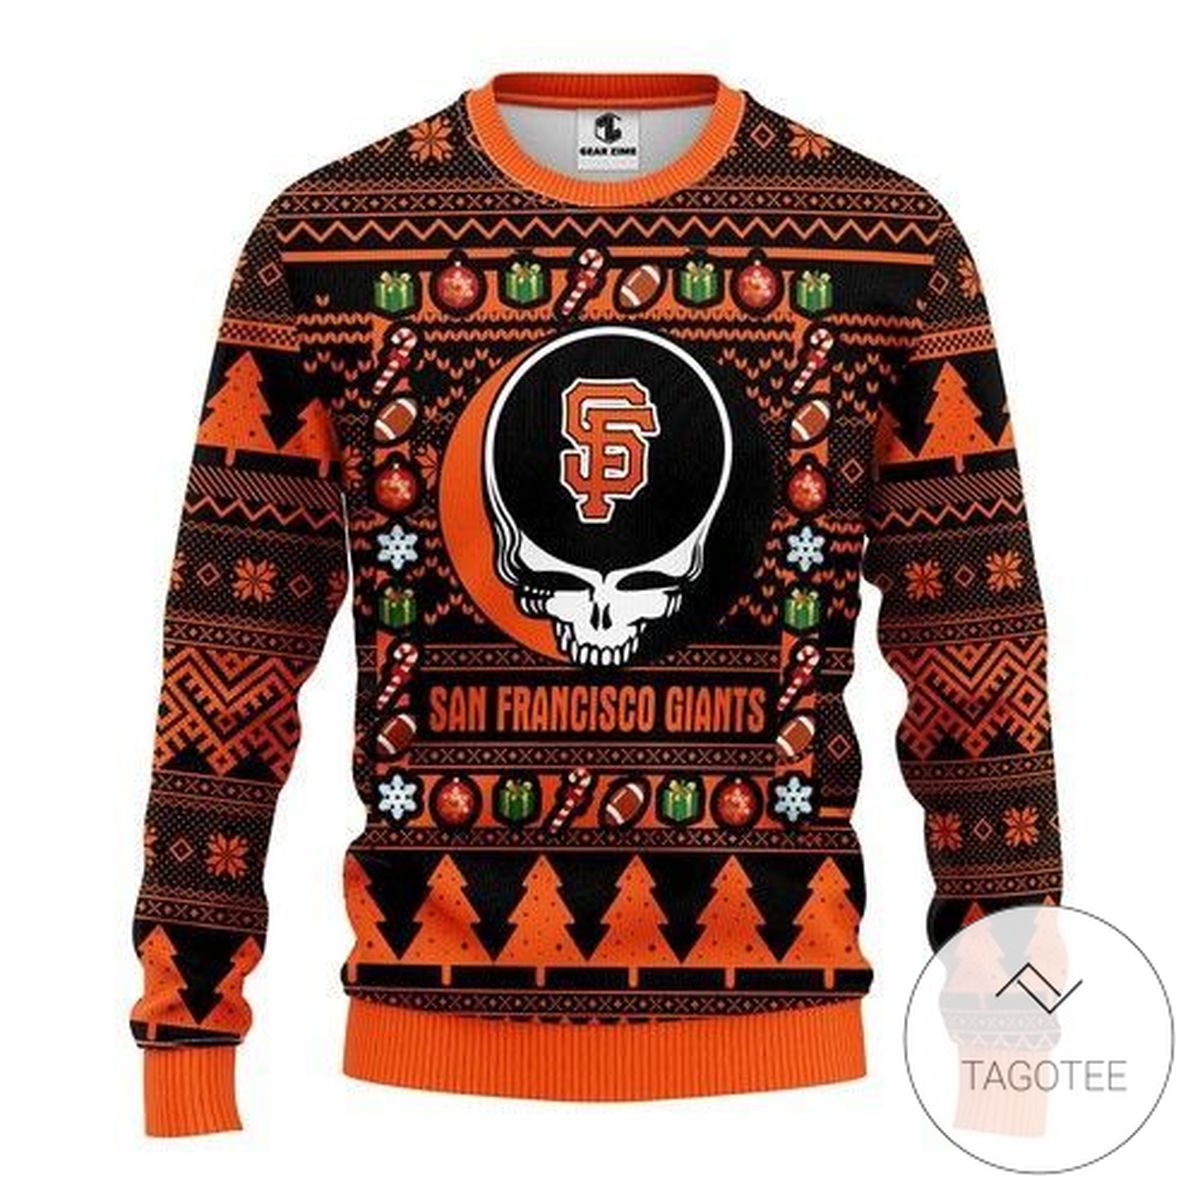 San Francisco Giants Grateful Dead Sweatshirt Knitted Ugly Christmas Sweater